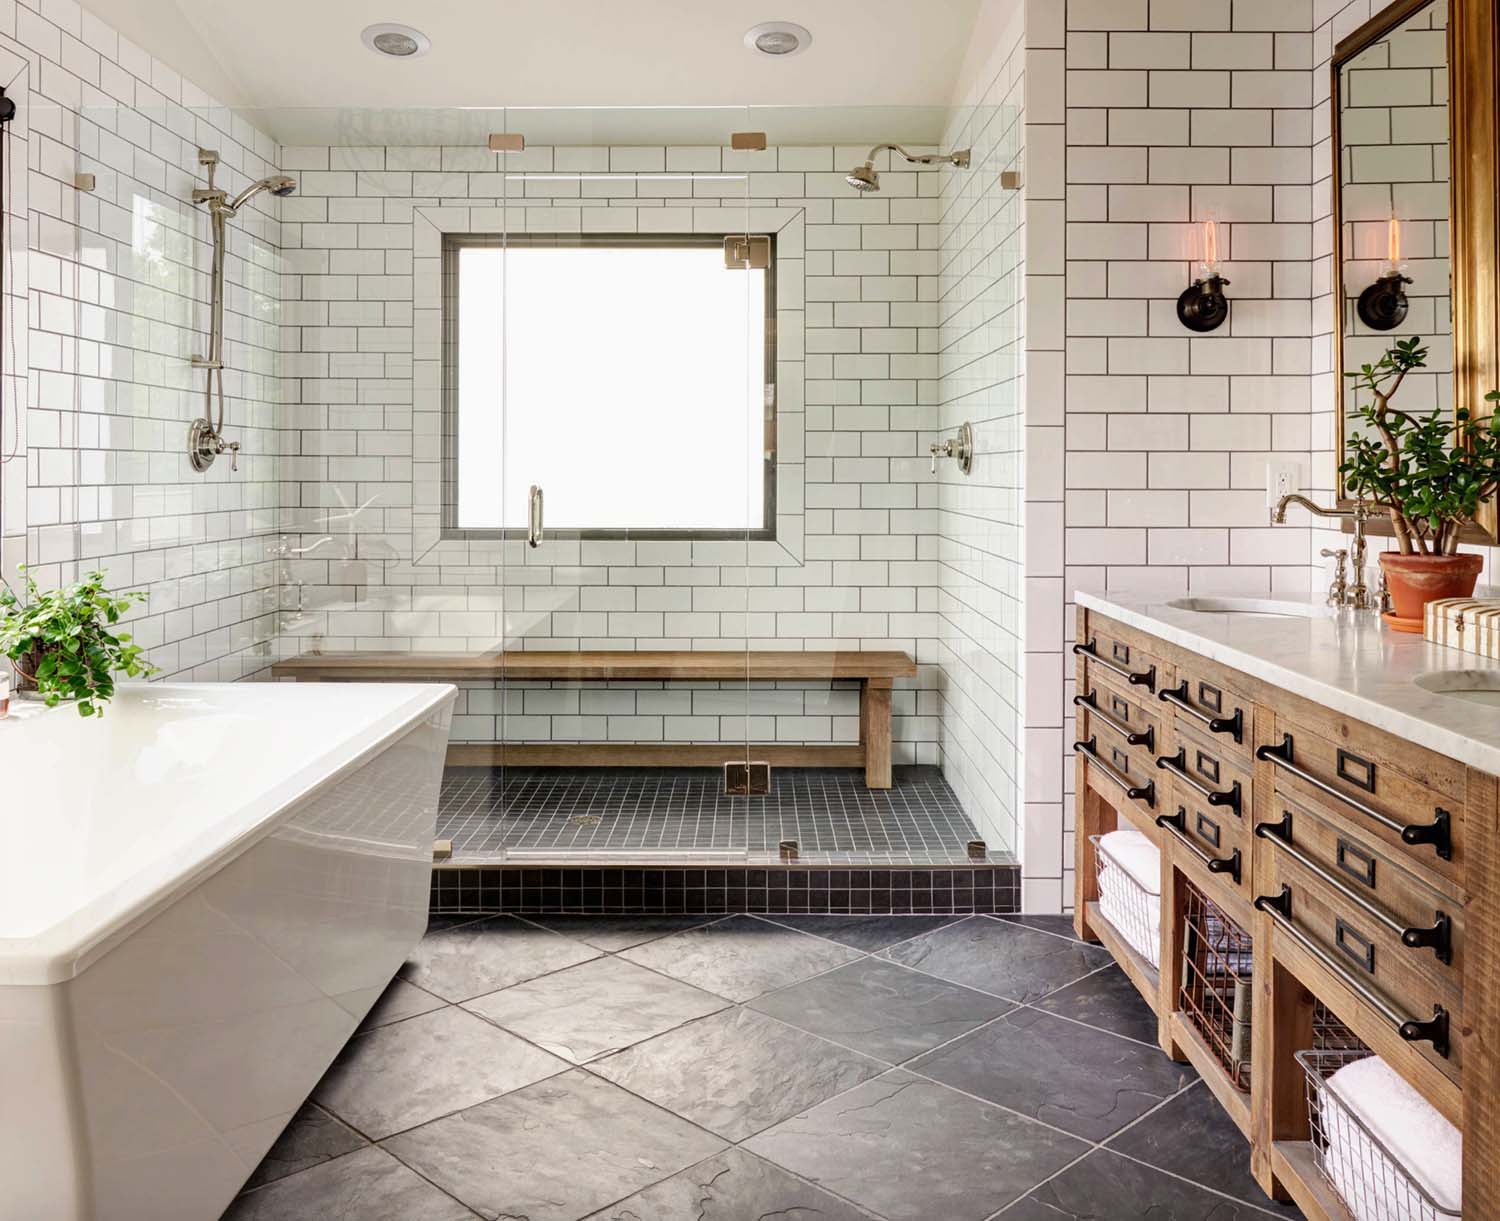 22 Farmhouse Bathroom Ideas That Will Astonish You